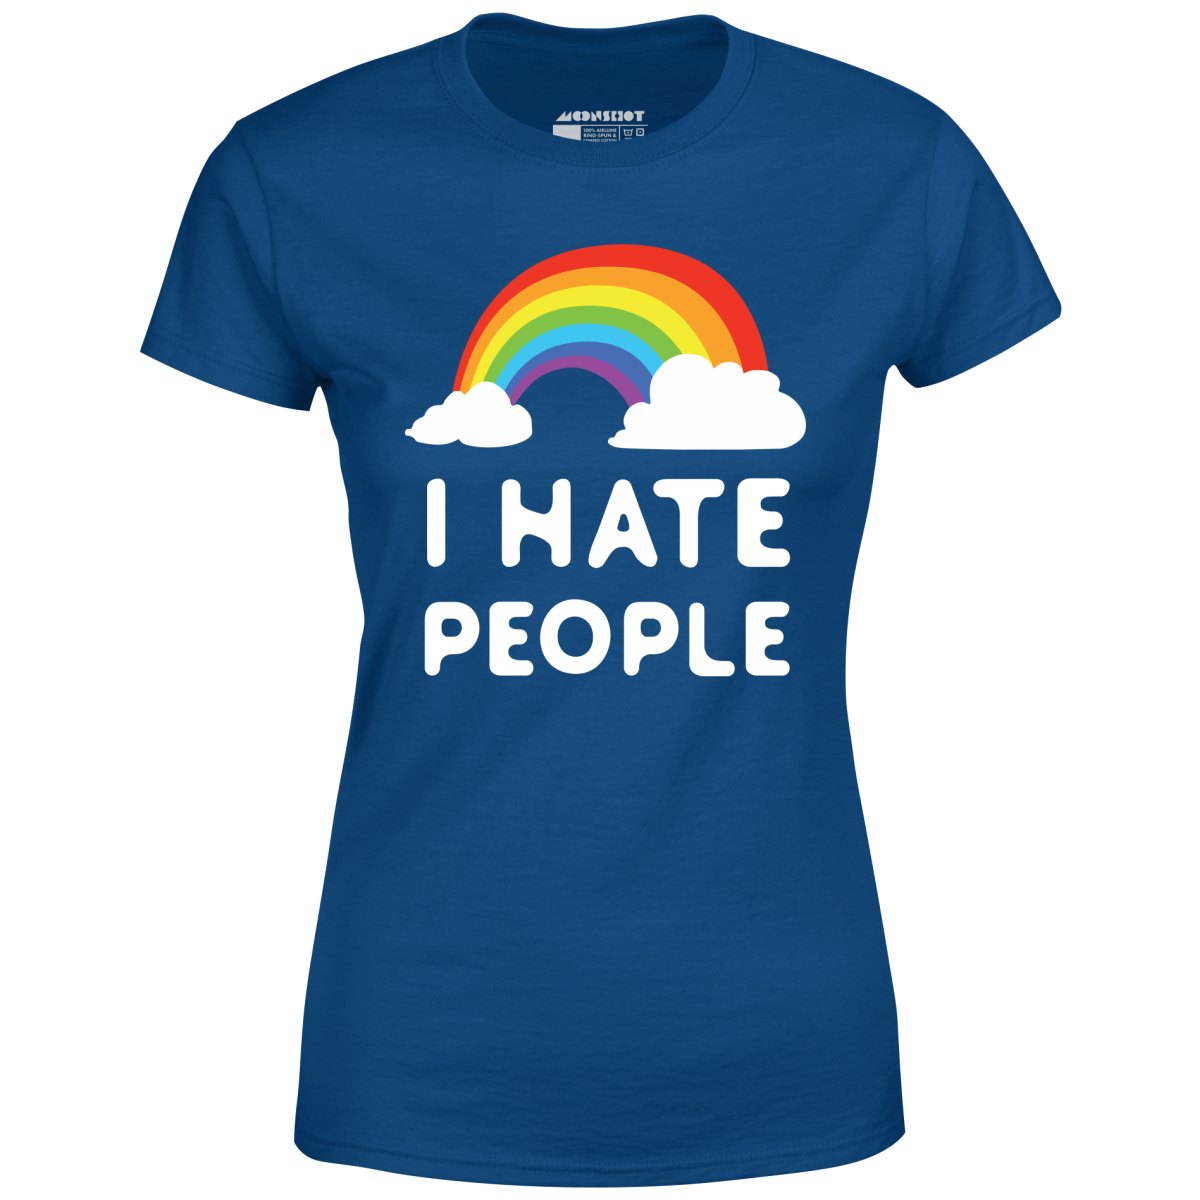 I Hate People - Women's T-Shirt